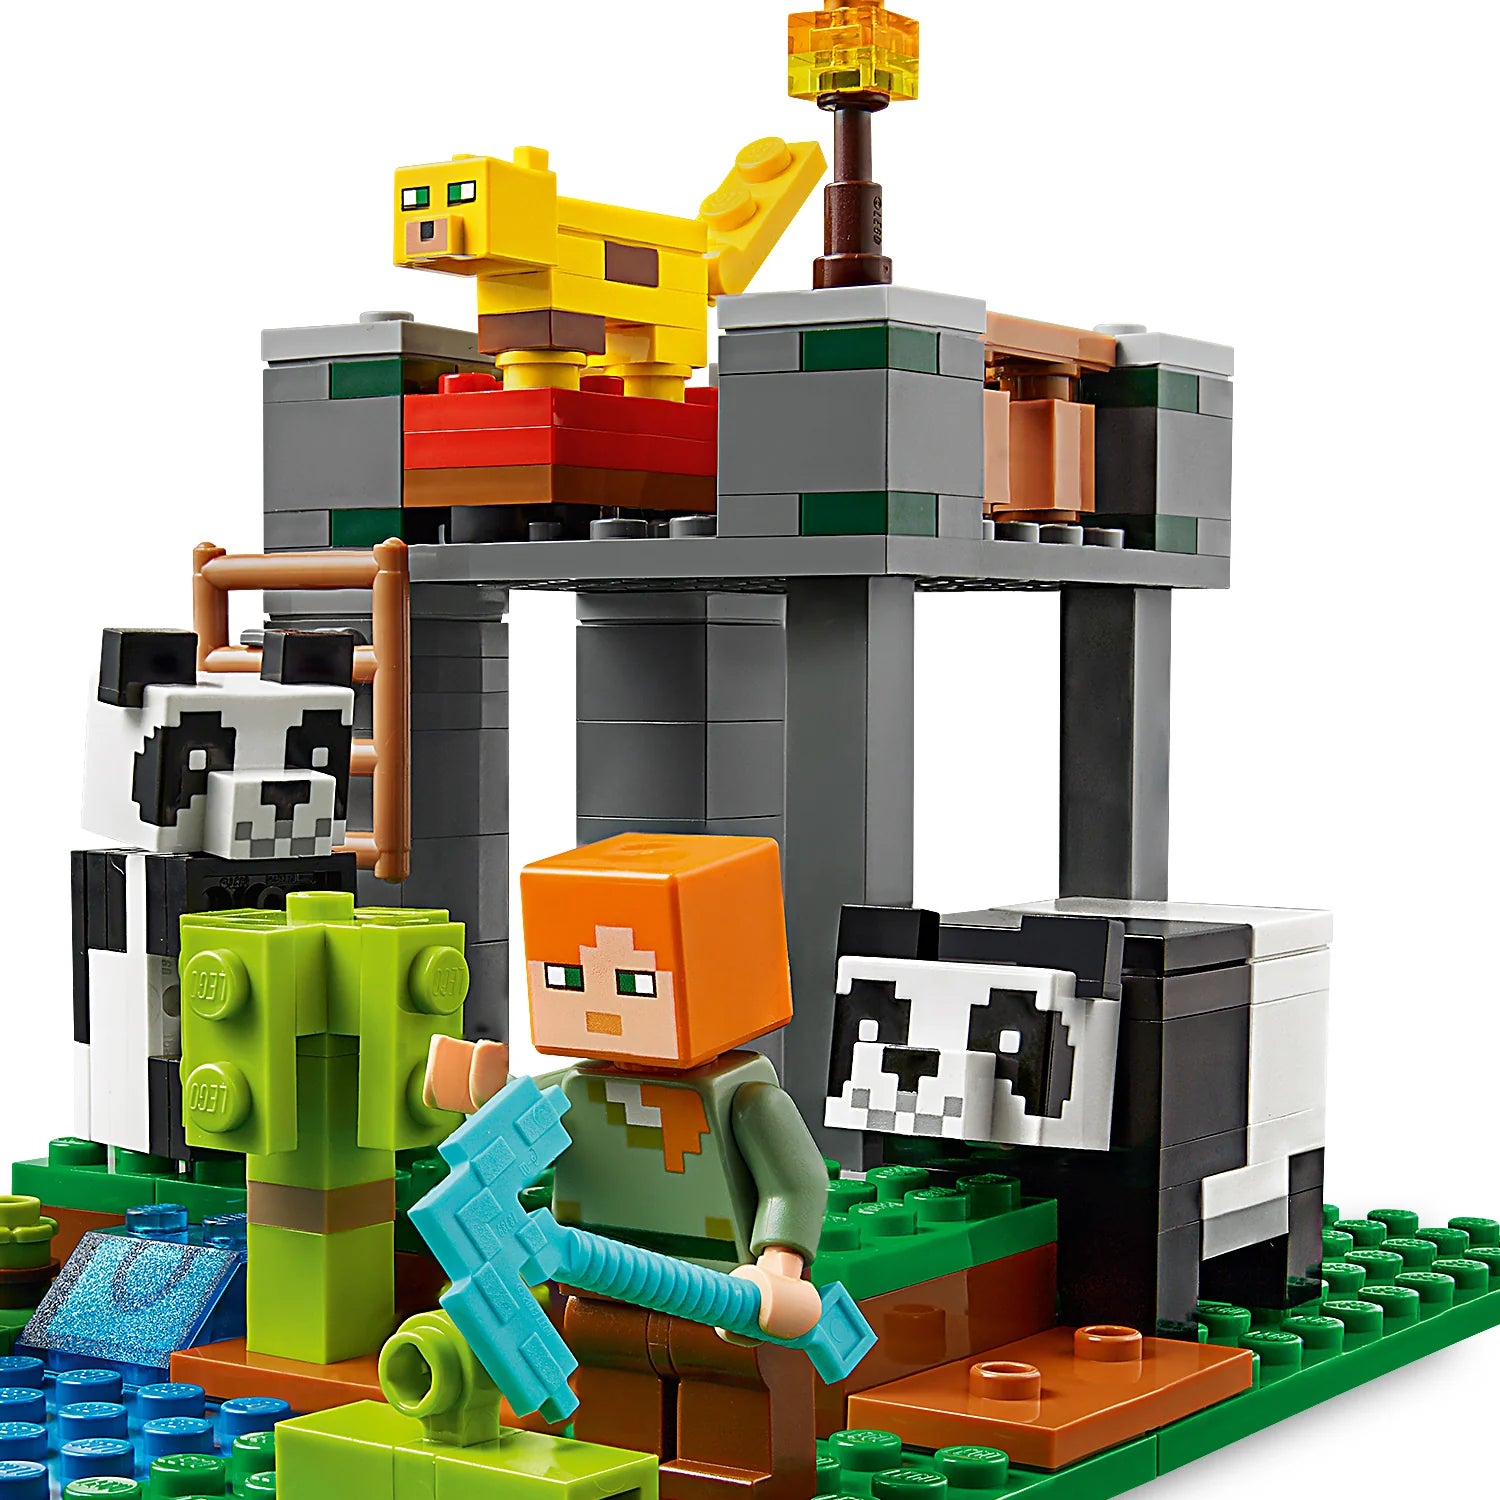 Minecraft: The panda enclosure Minecraft-LEGO Minecraft – Brugs